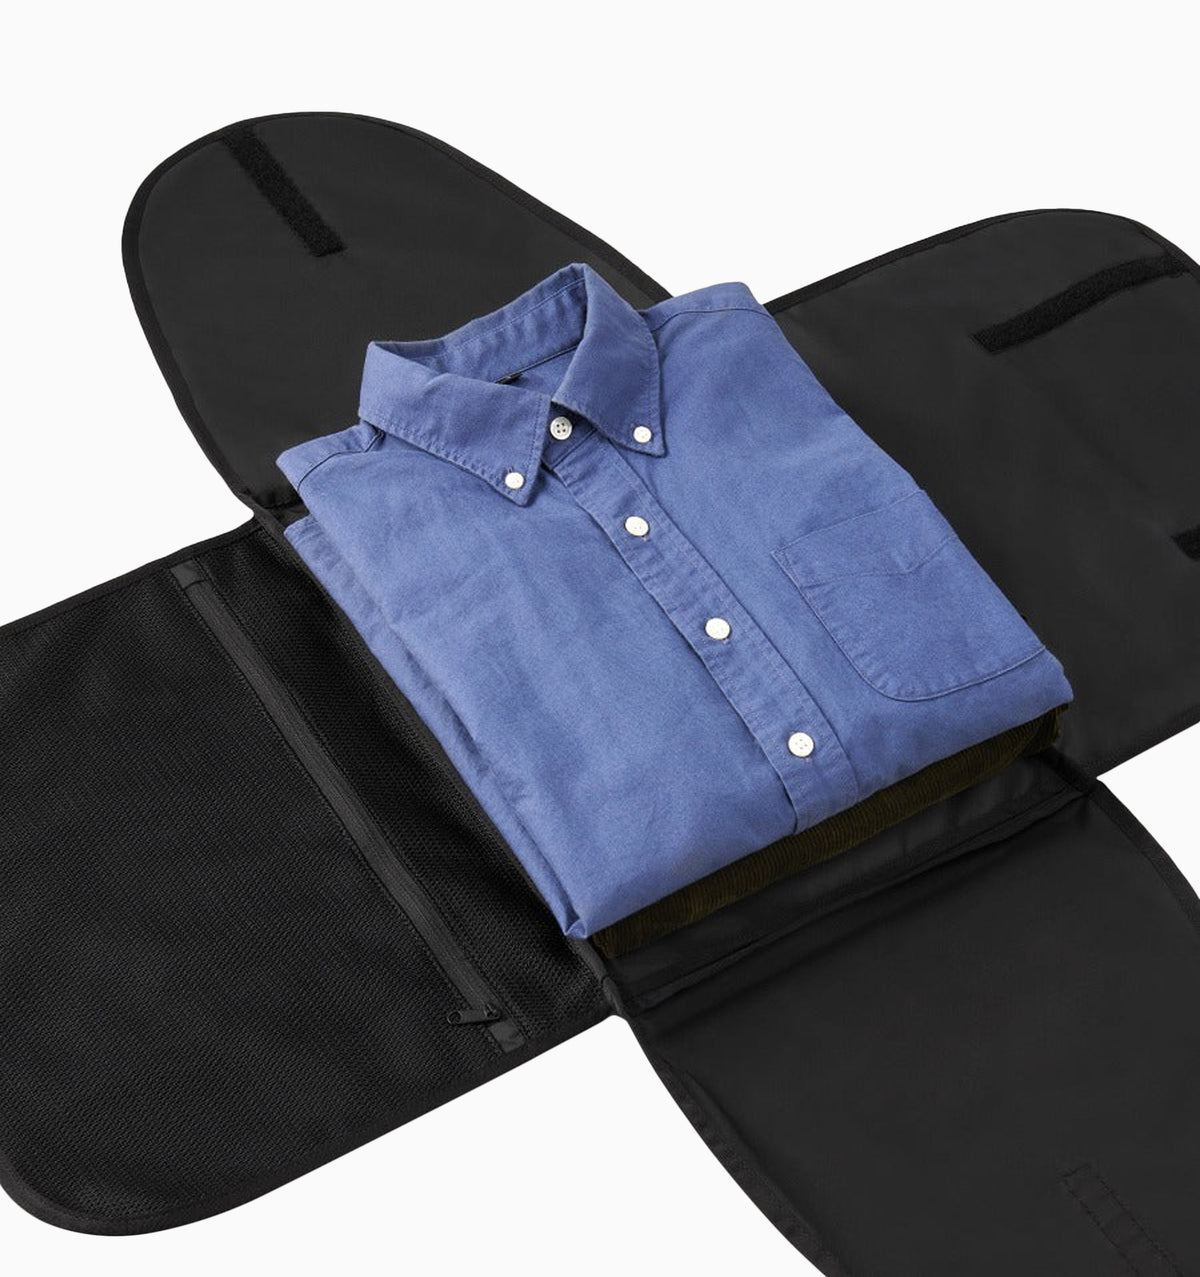 Minaal Shirt Protector 3.0 - Aoraki Black